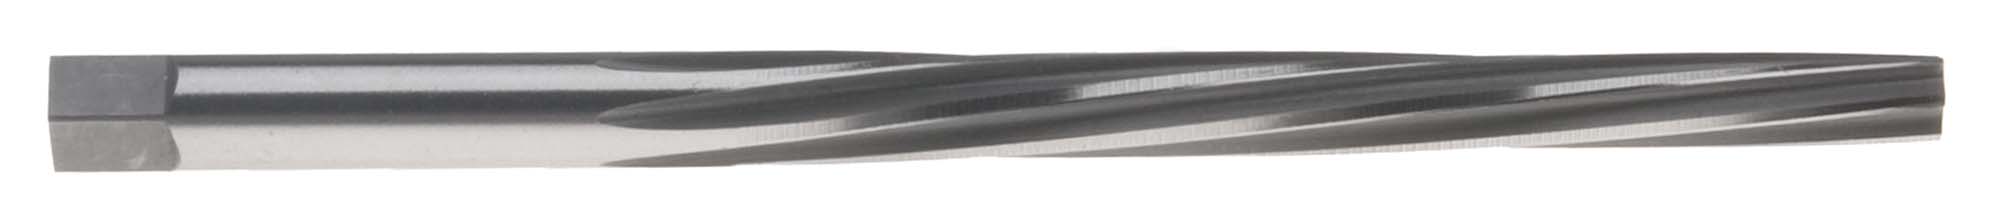 #3 Spiral Flute Taper Pin Reamer, High Speed Steel